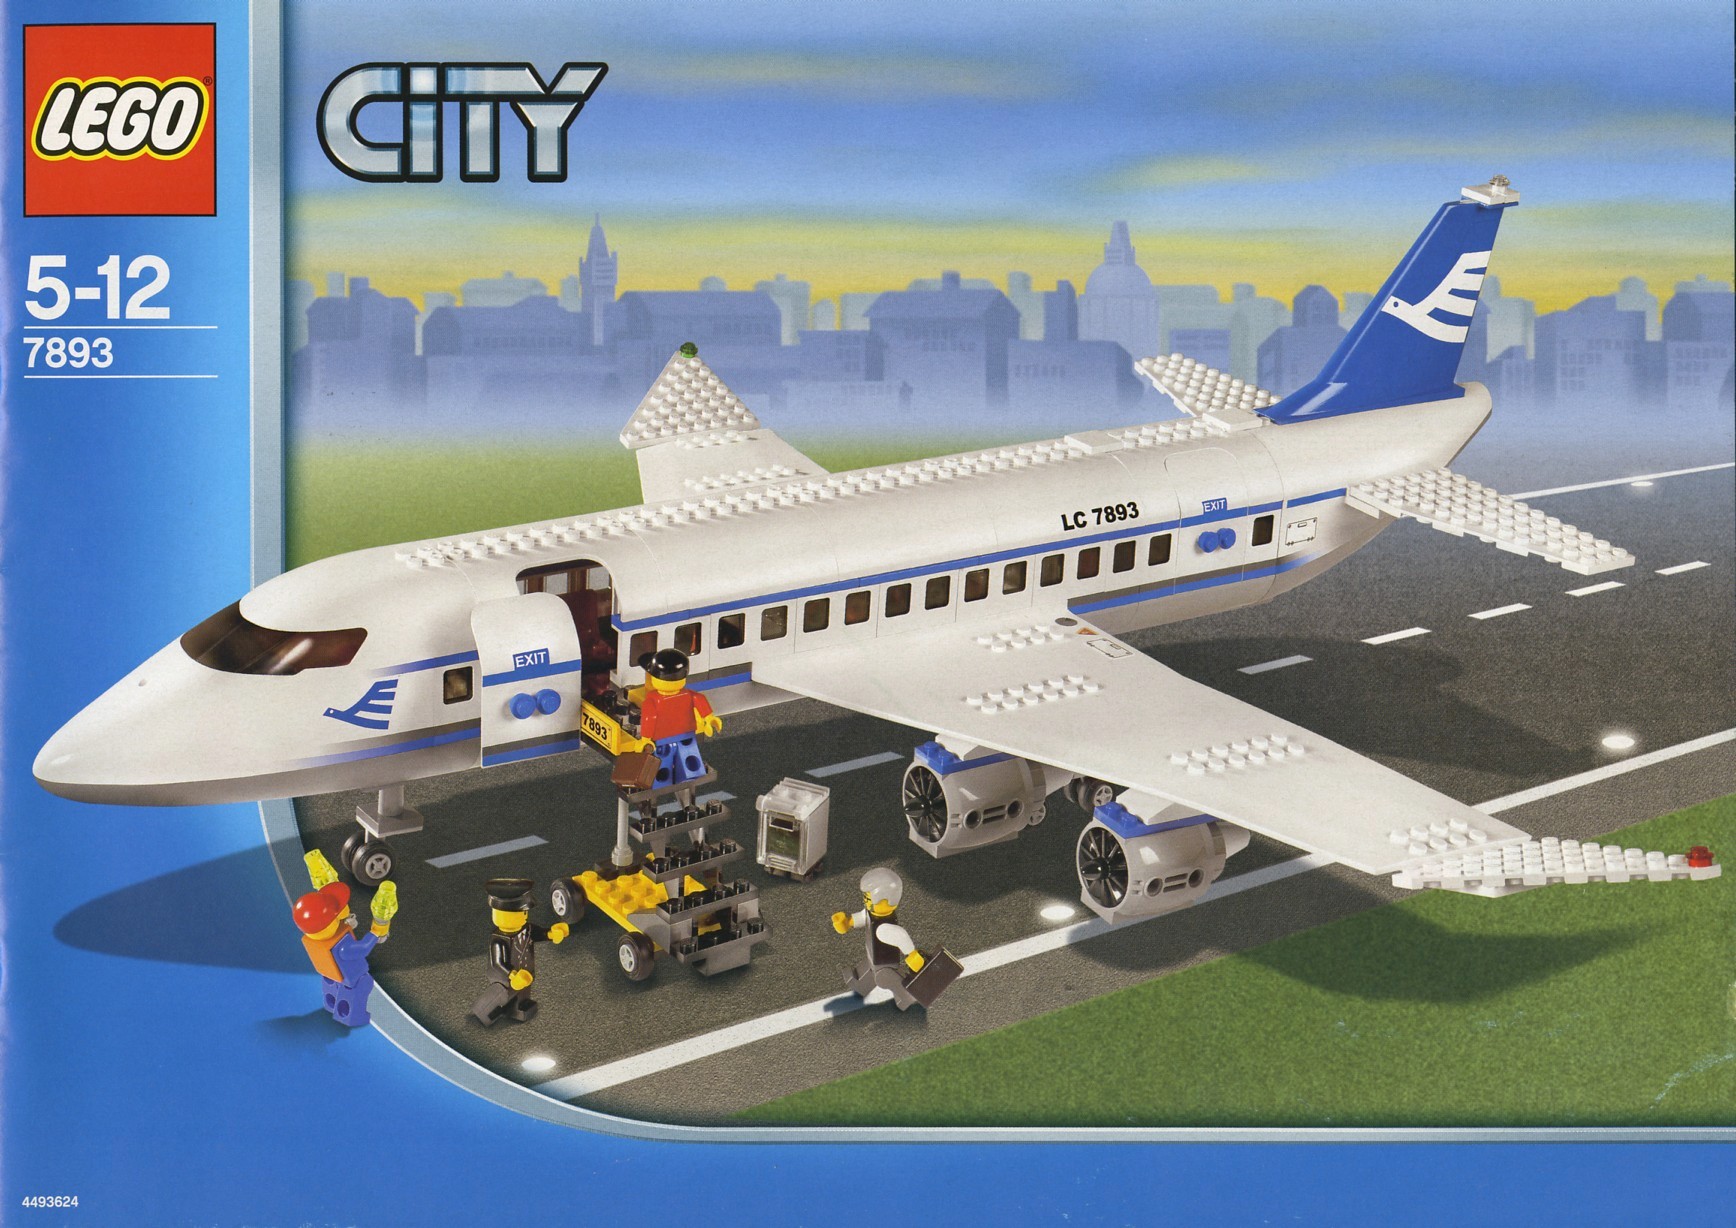 LEGO City Airport Brickset